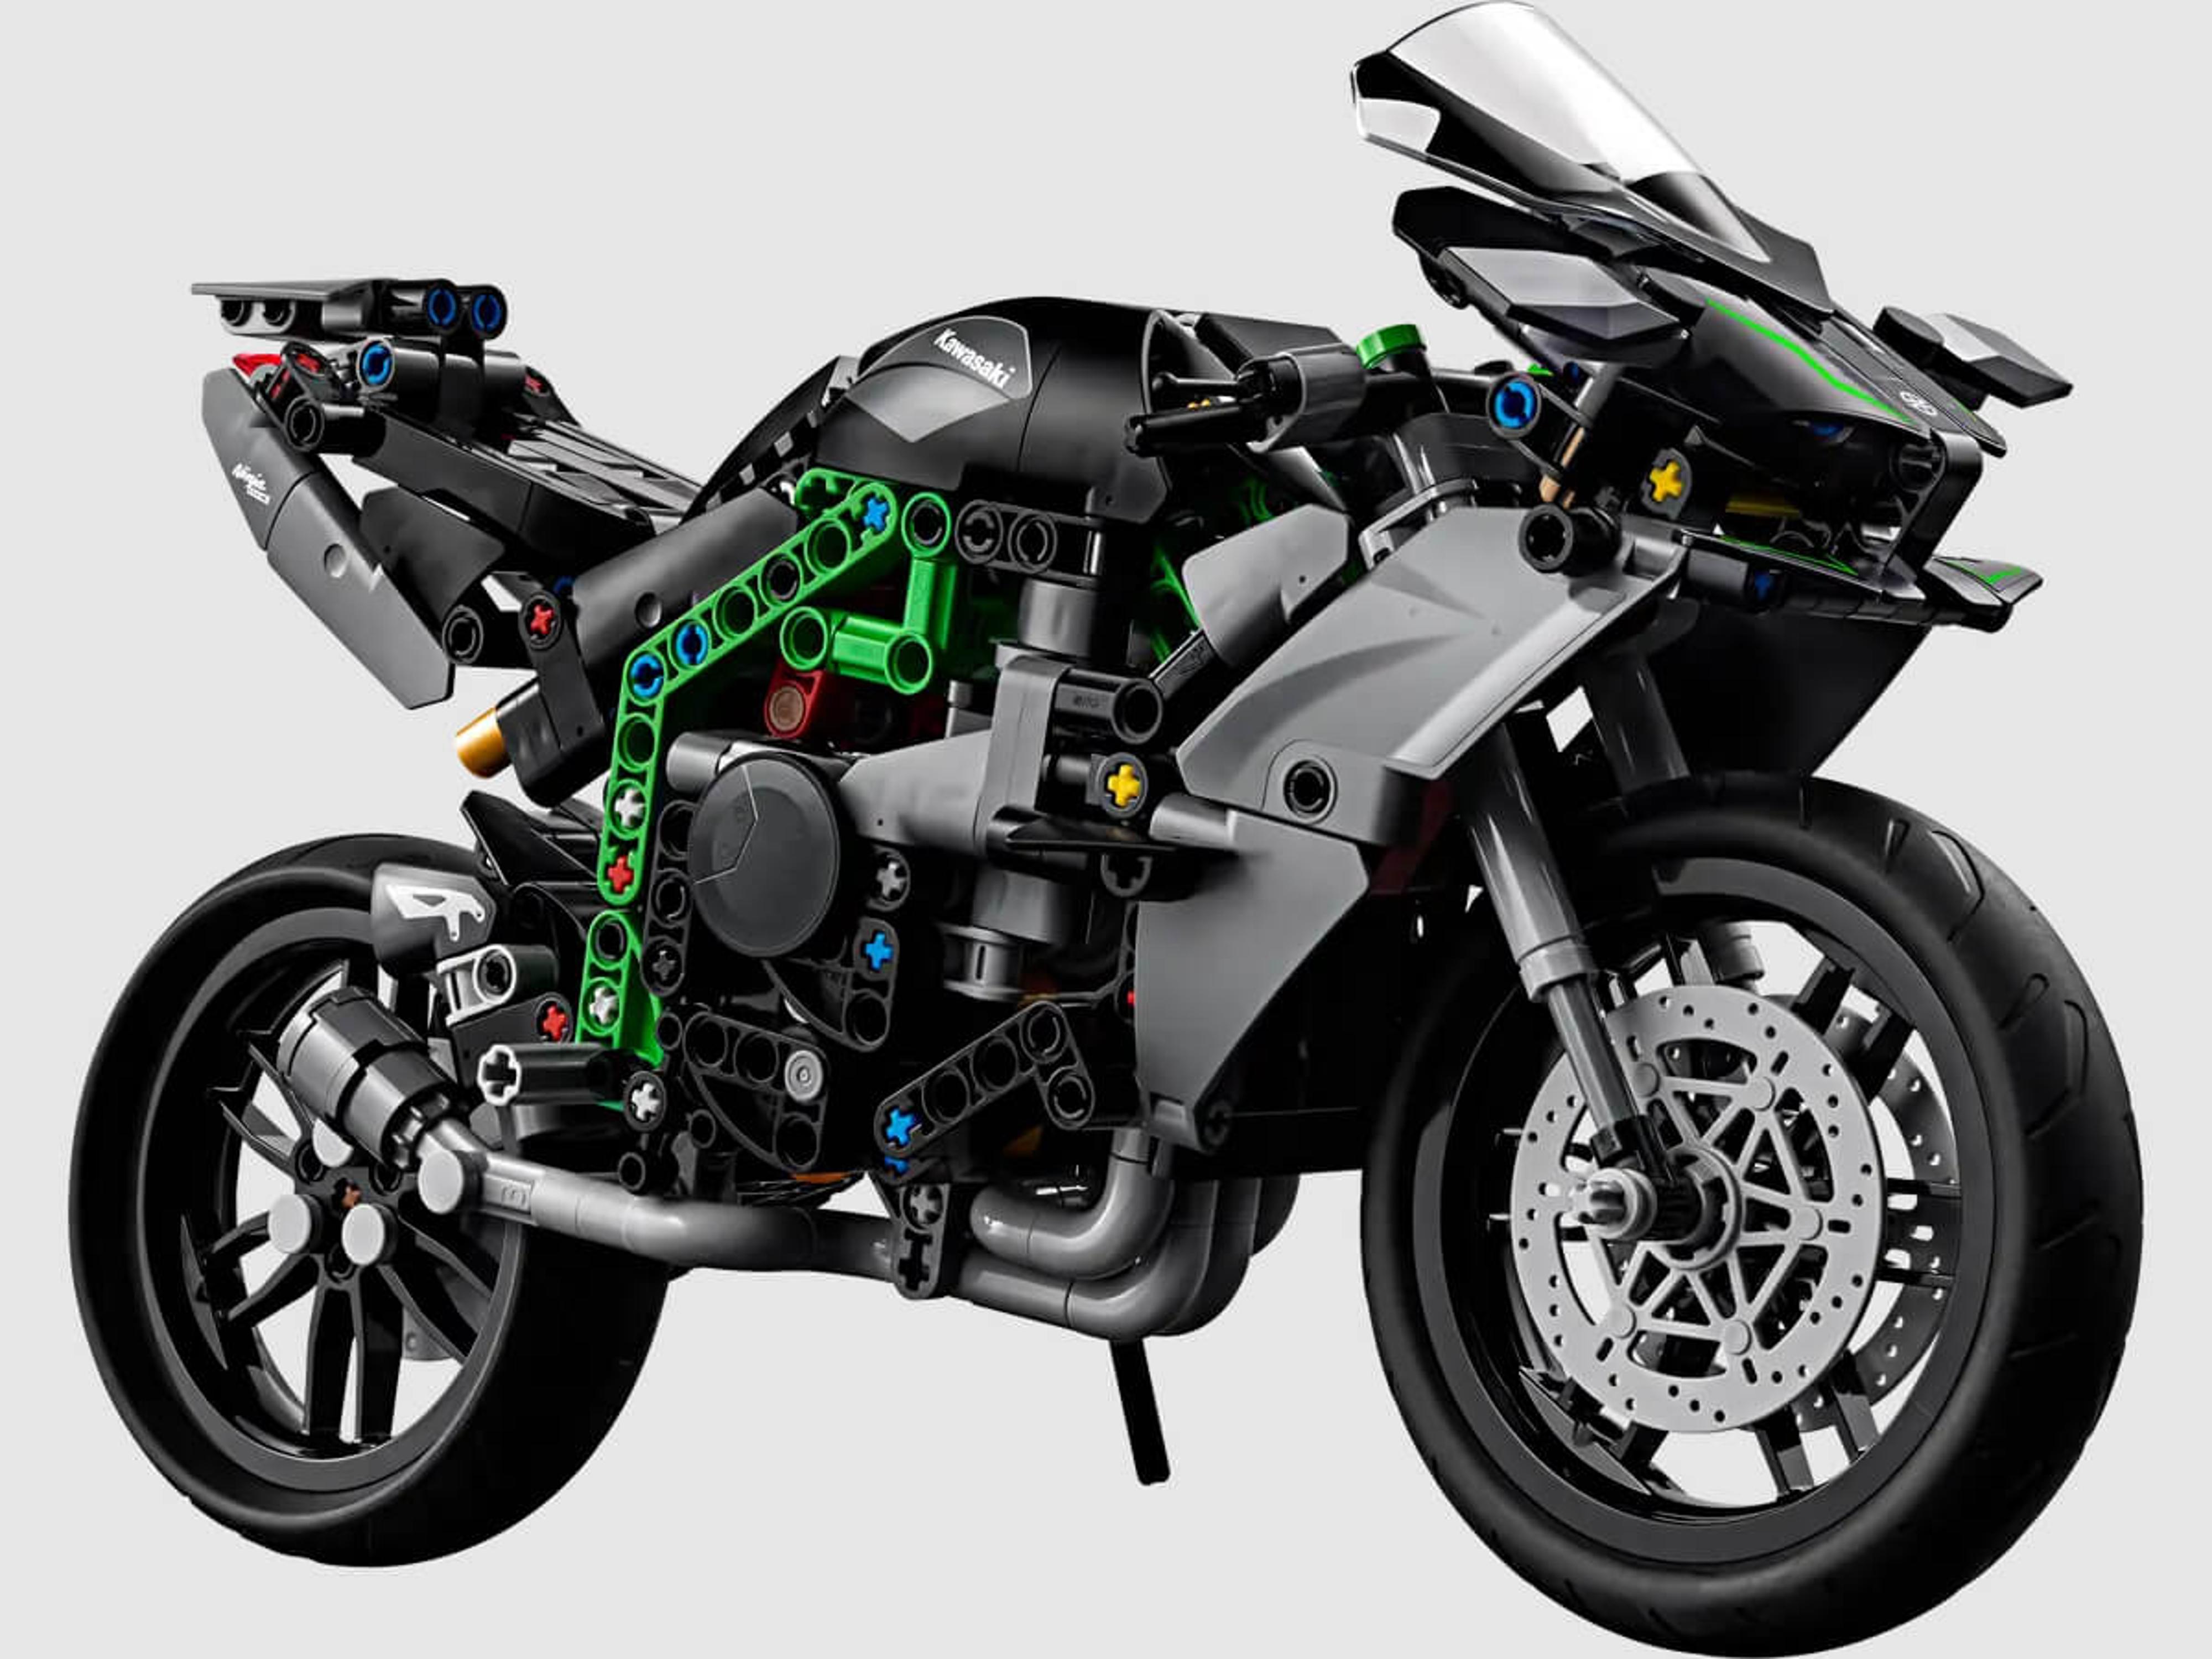 Technic - Kawaski Ninja H2R Motorcycle